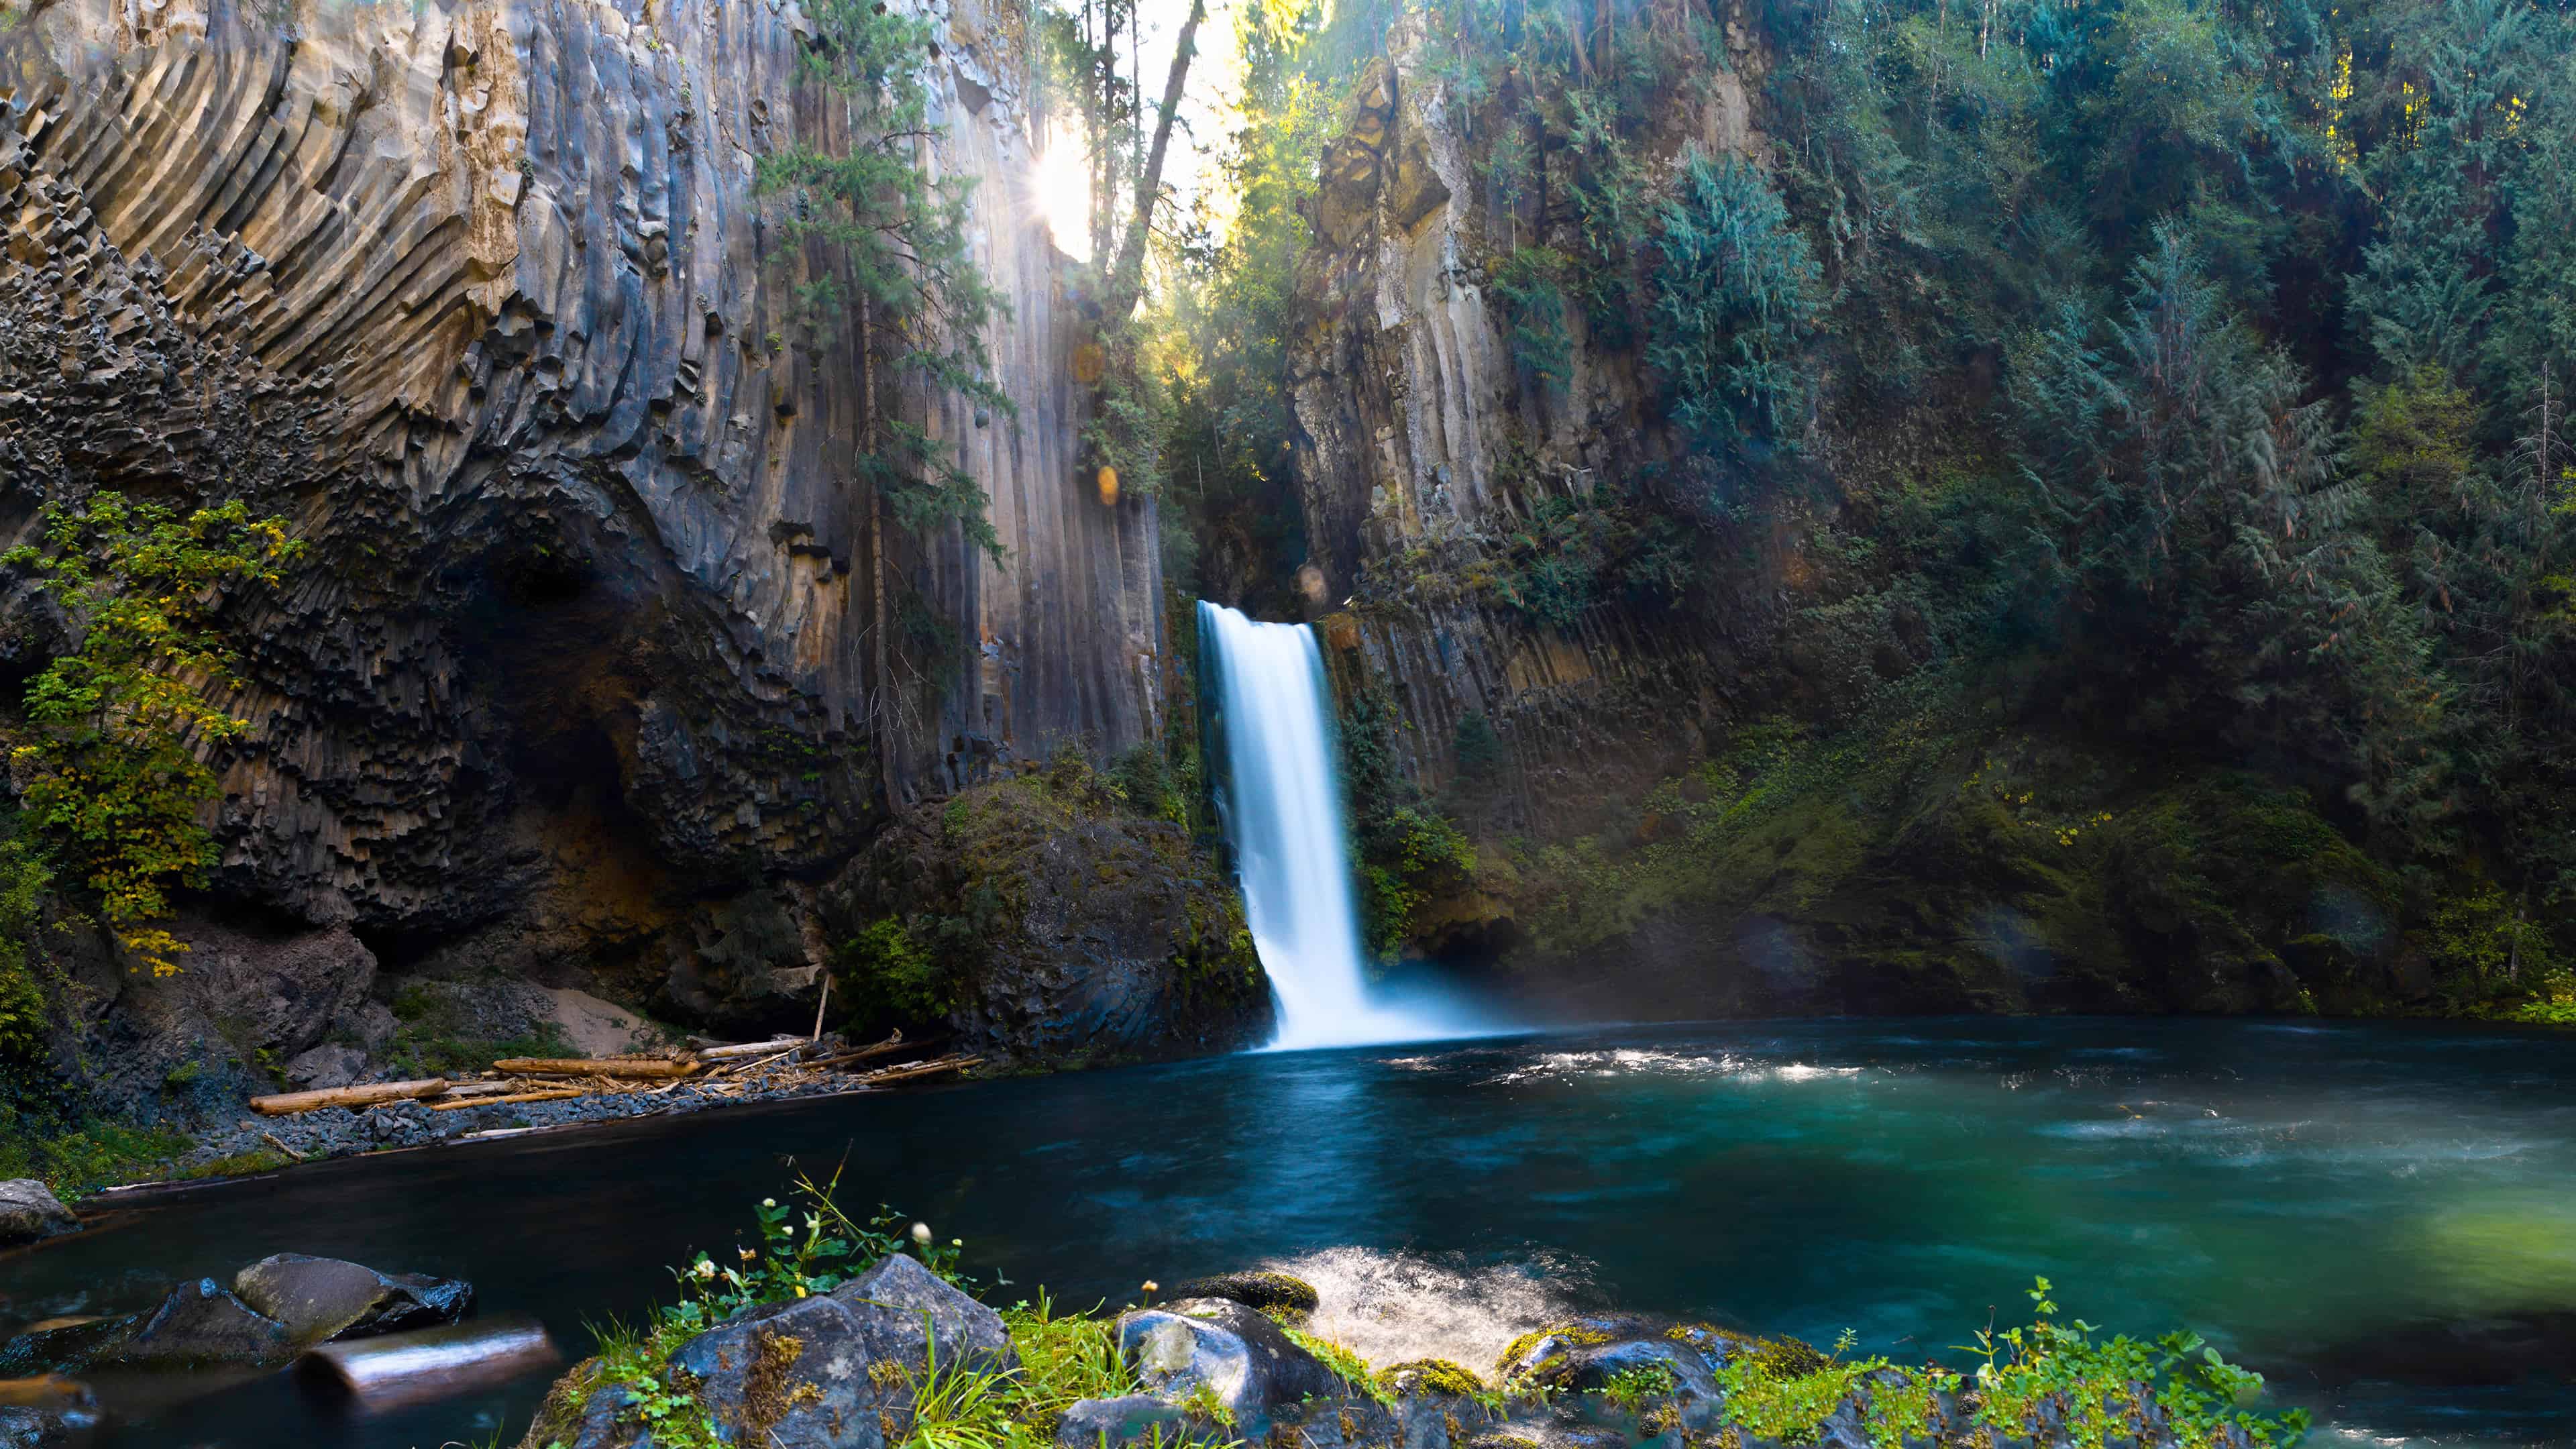 Внутренние водопады. Водопад Мосбрей, США. Водопады АИР-Терджун-Меньюсоп. Водопад Джирхва. Каньон реки Колумбия.